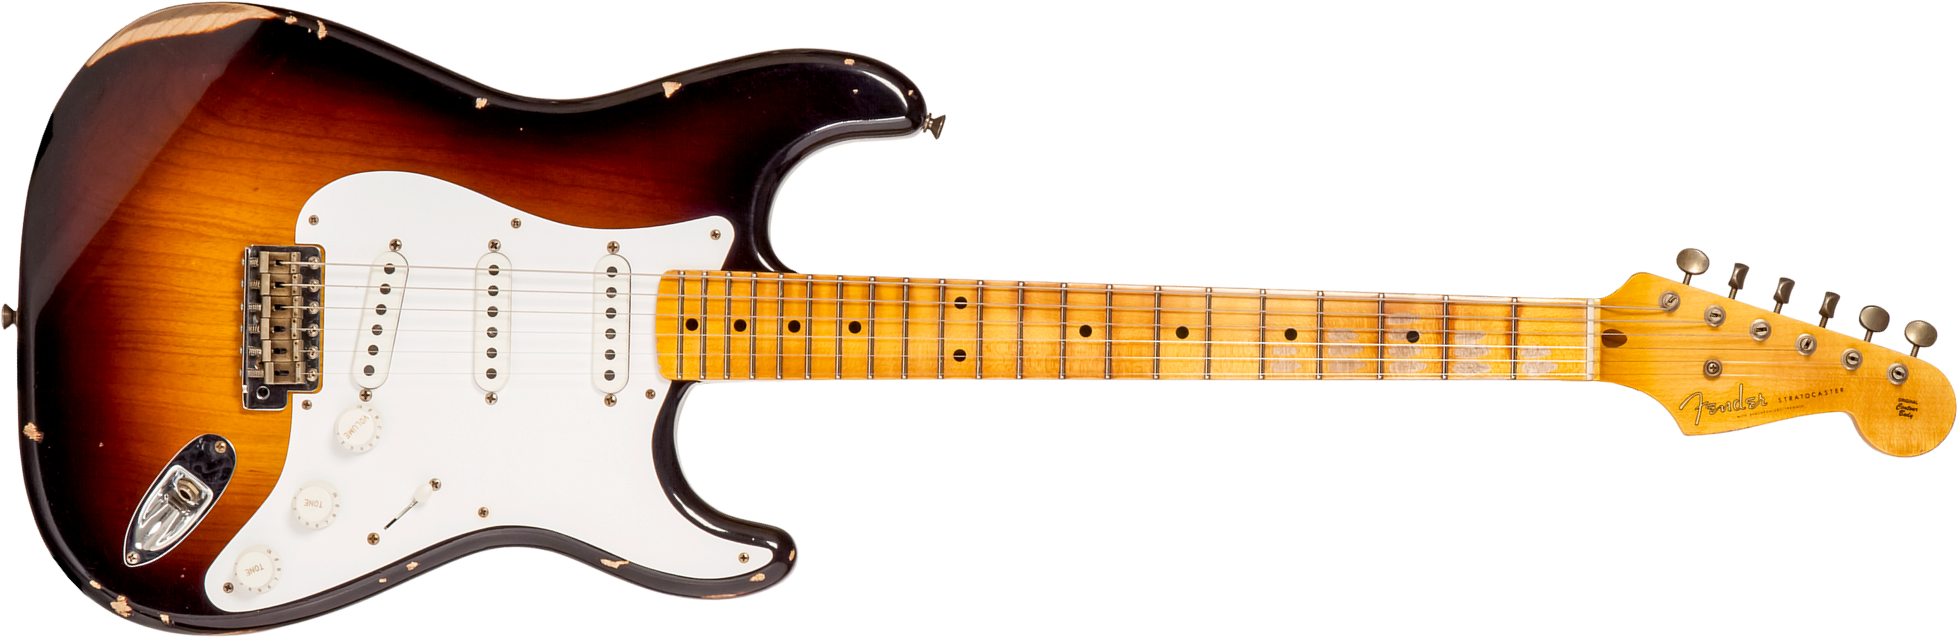 Fender Custom Shop Strat 1954 70th Anniv. 3s Trem Mn #xn4158 - Relic Wide-fade 2-color Sunburst - Str shape electric guitar - Main picture